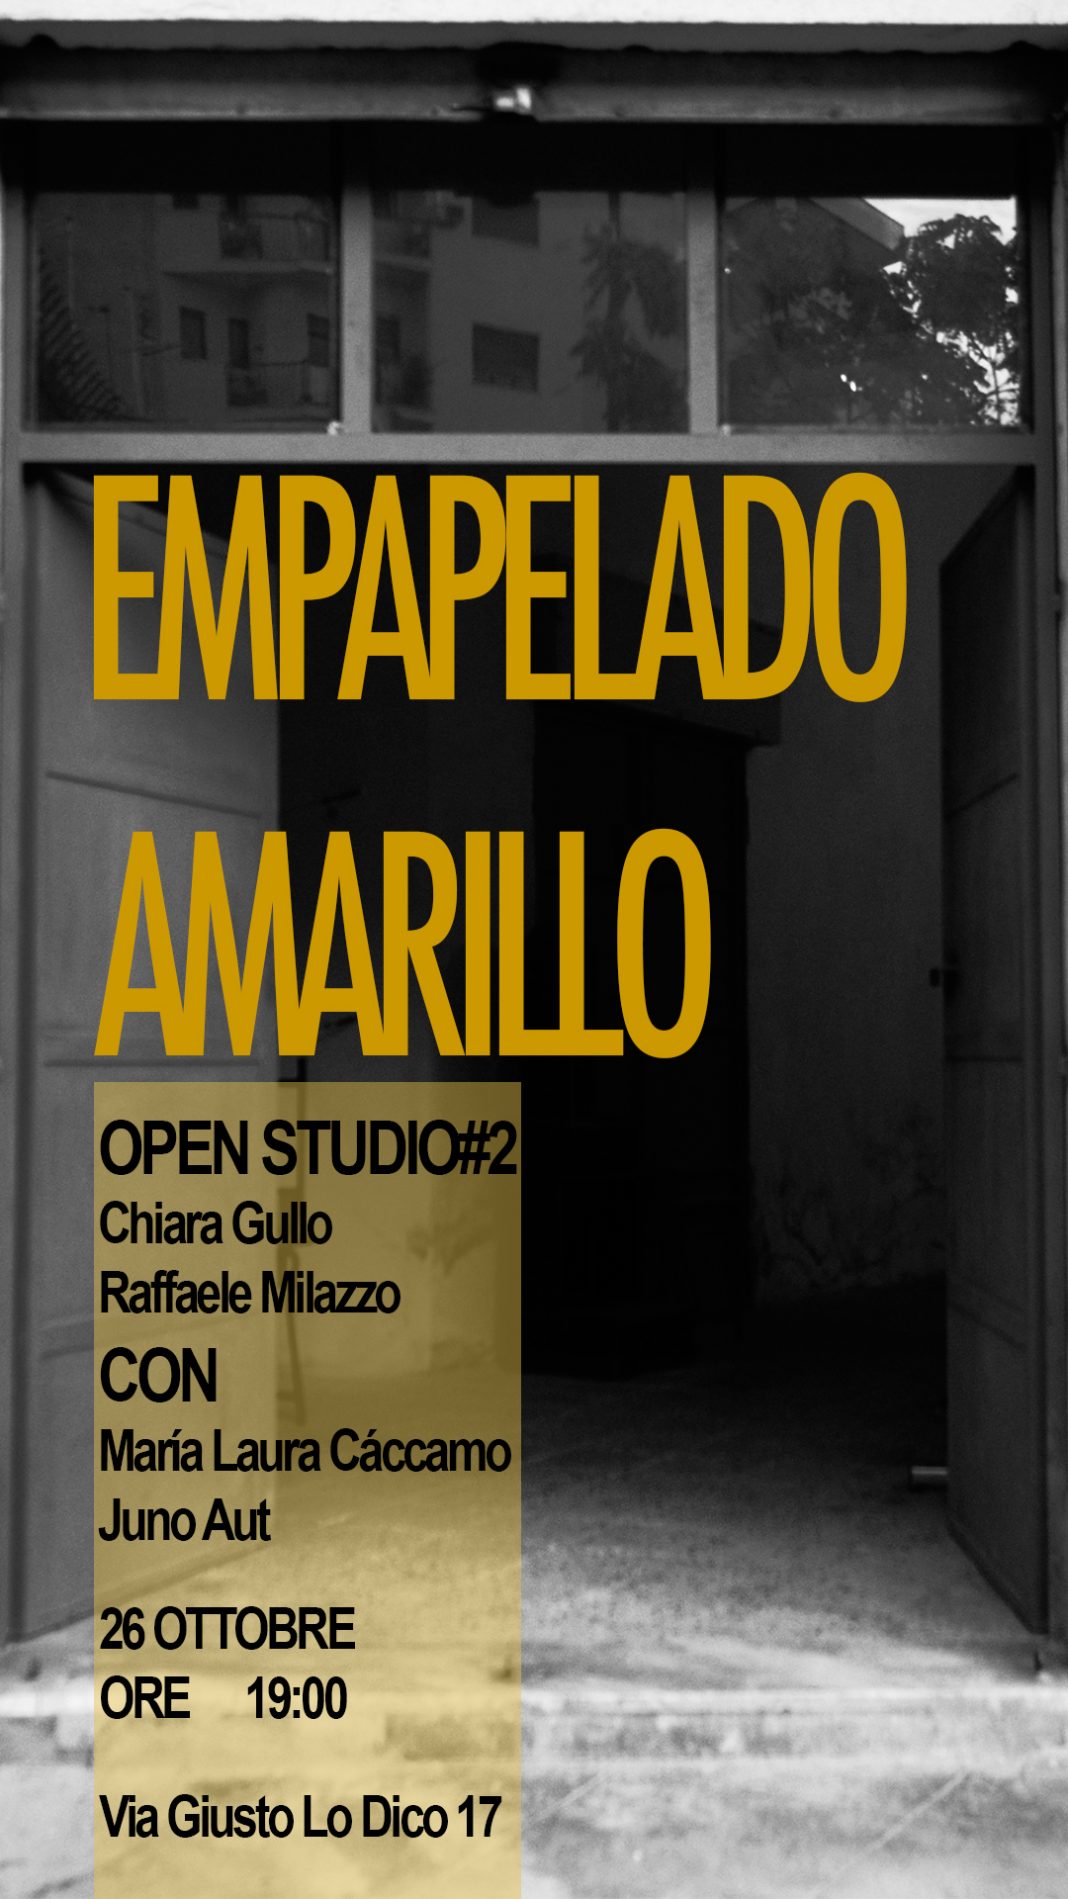 Open Studio #2: Empapelado Amarillohttps://www.exibart.com/repository/media/formidable/11/storis-insta3-1068x1899.jpg